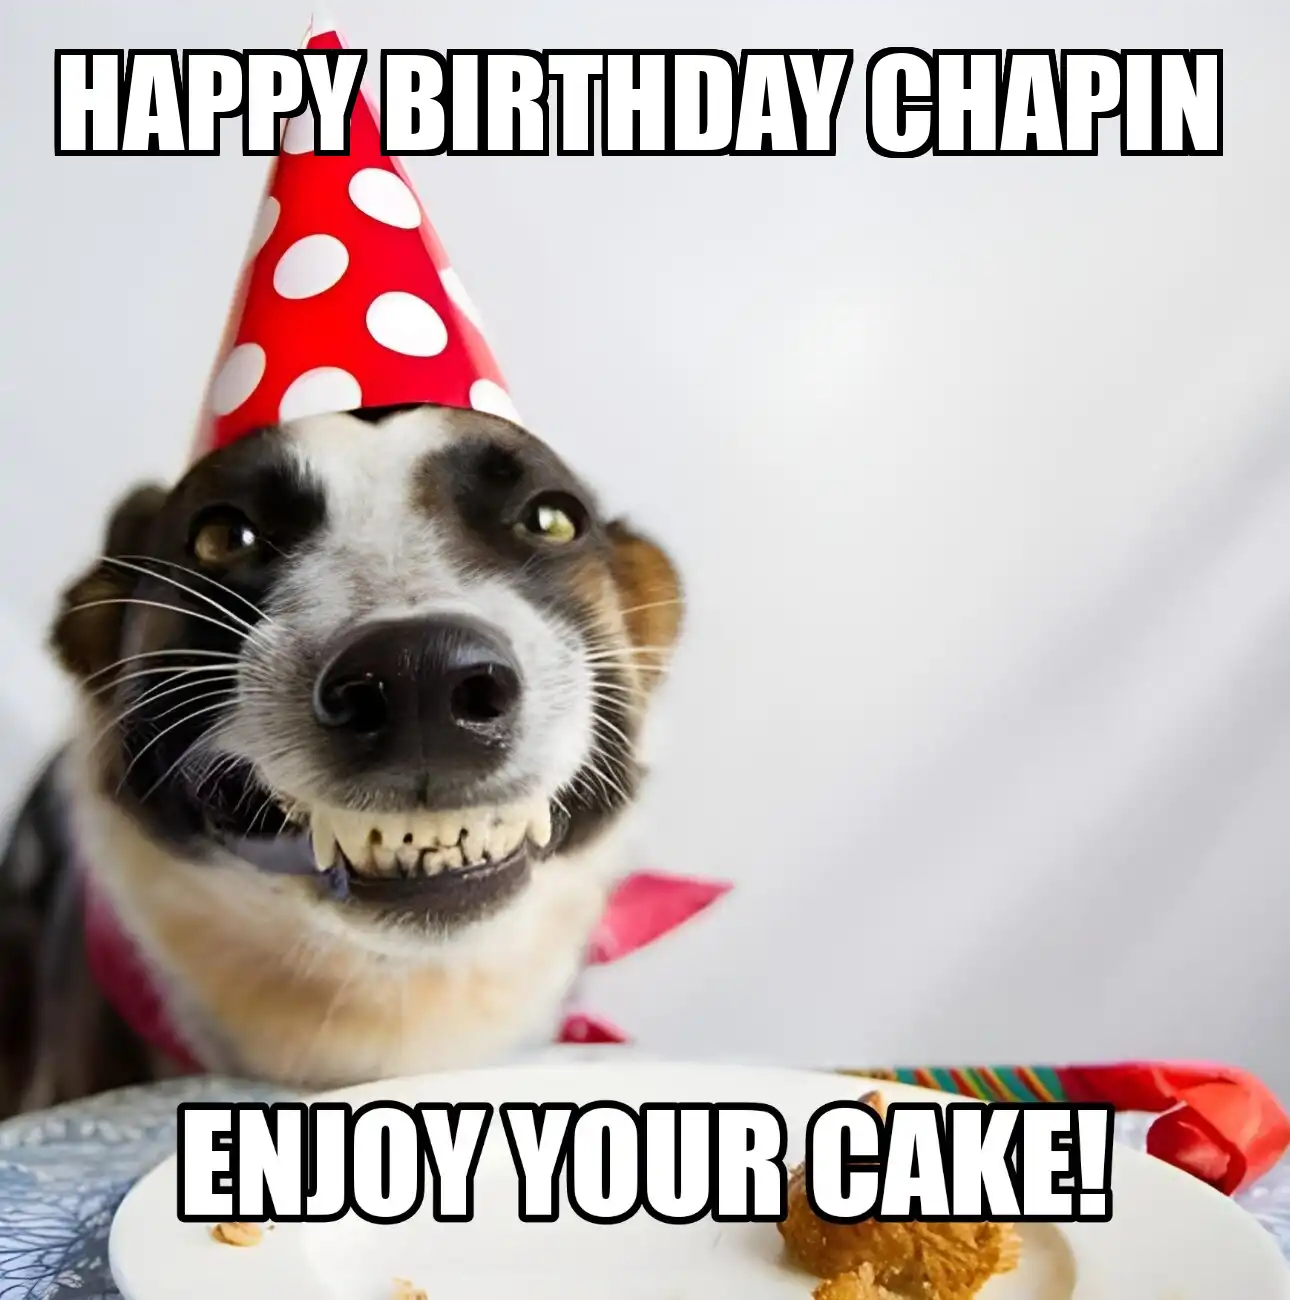 Happy Birthday Chapin Enjoy Your Cake Dog Meme